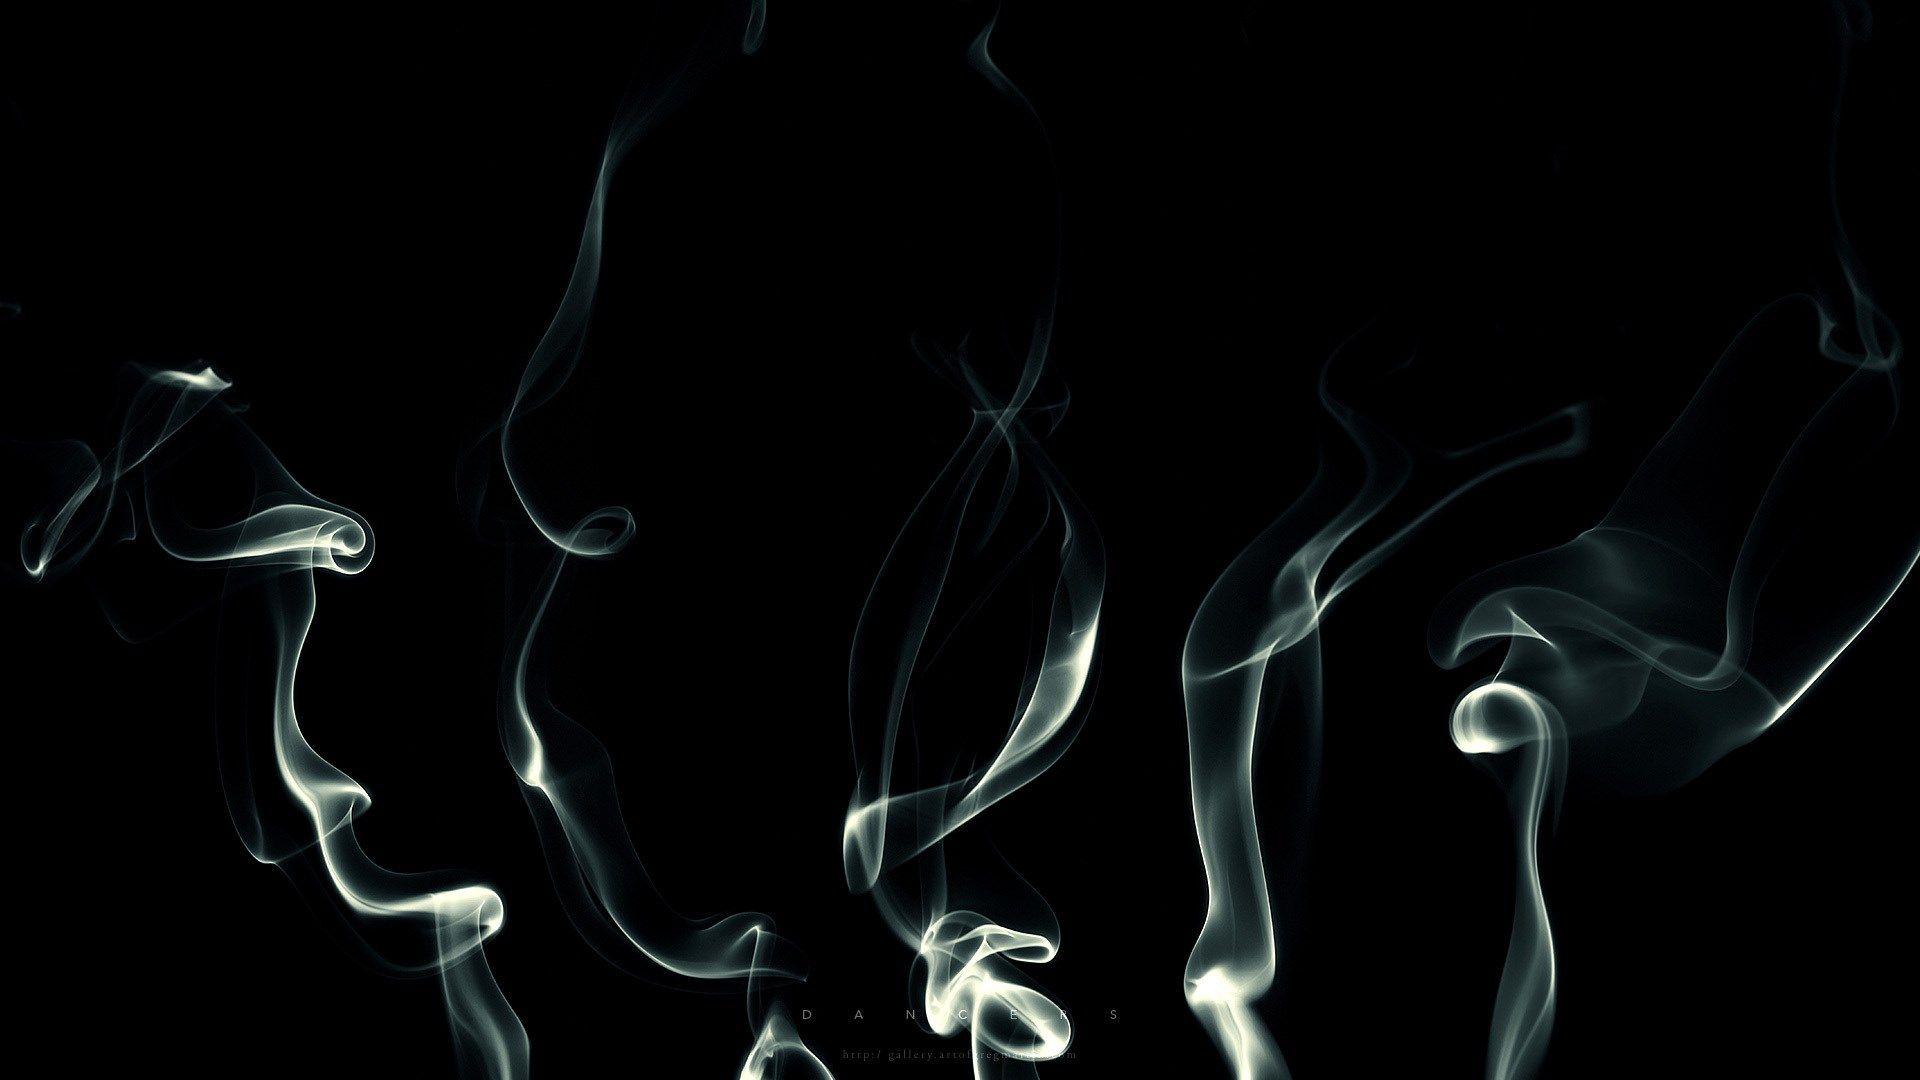 1920 x 1080 · jpeg - art smoke in black wallpaper hd | Phone wallpaper for men, Smoke ...